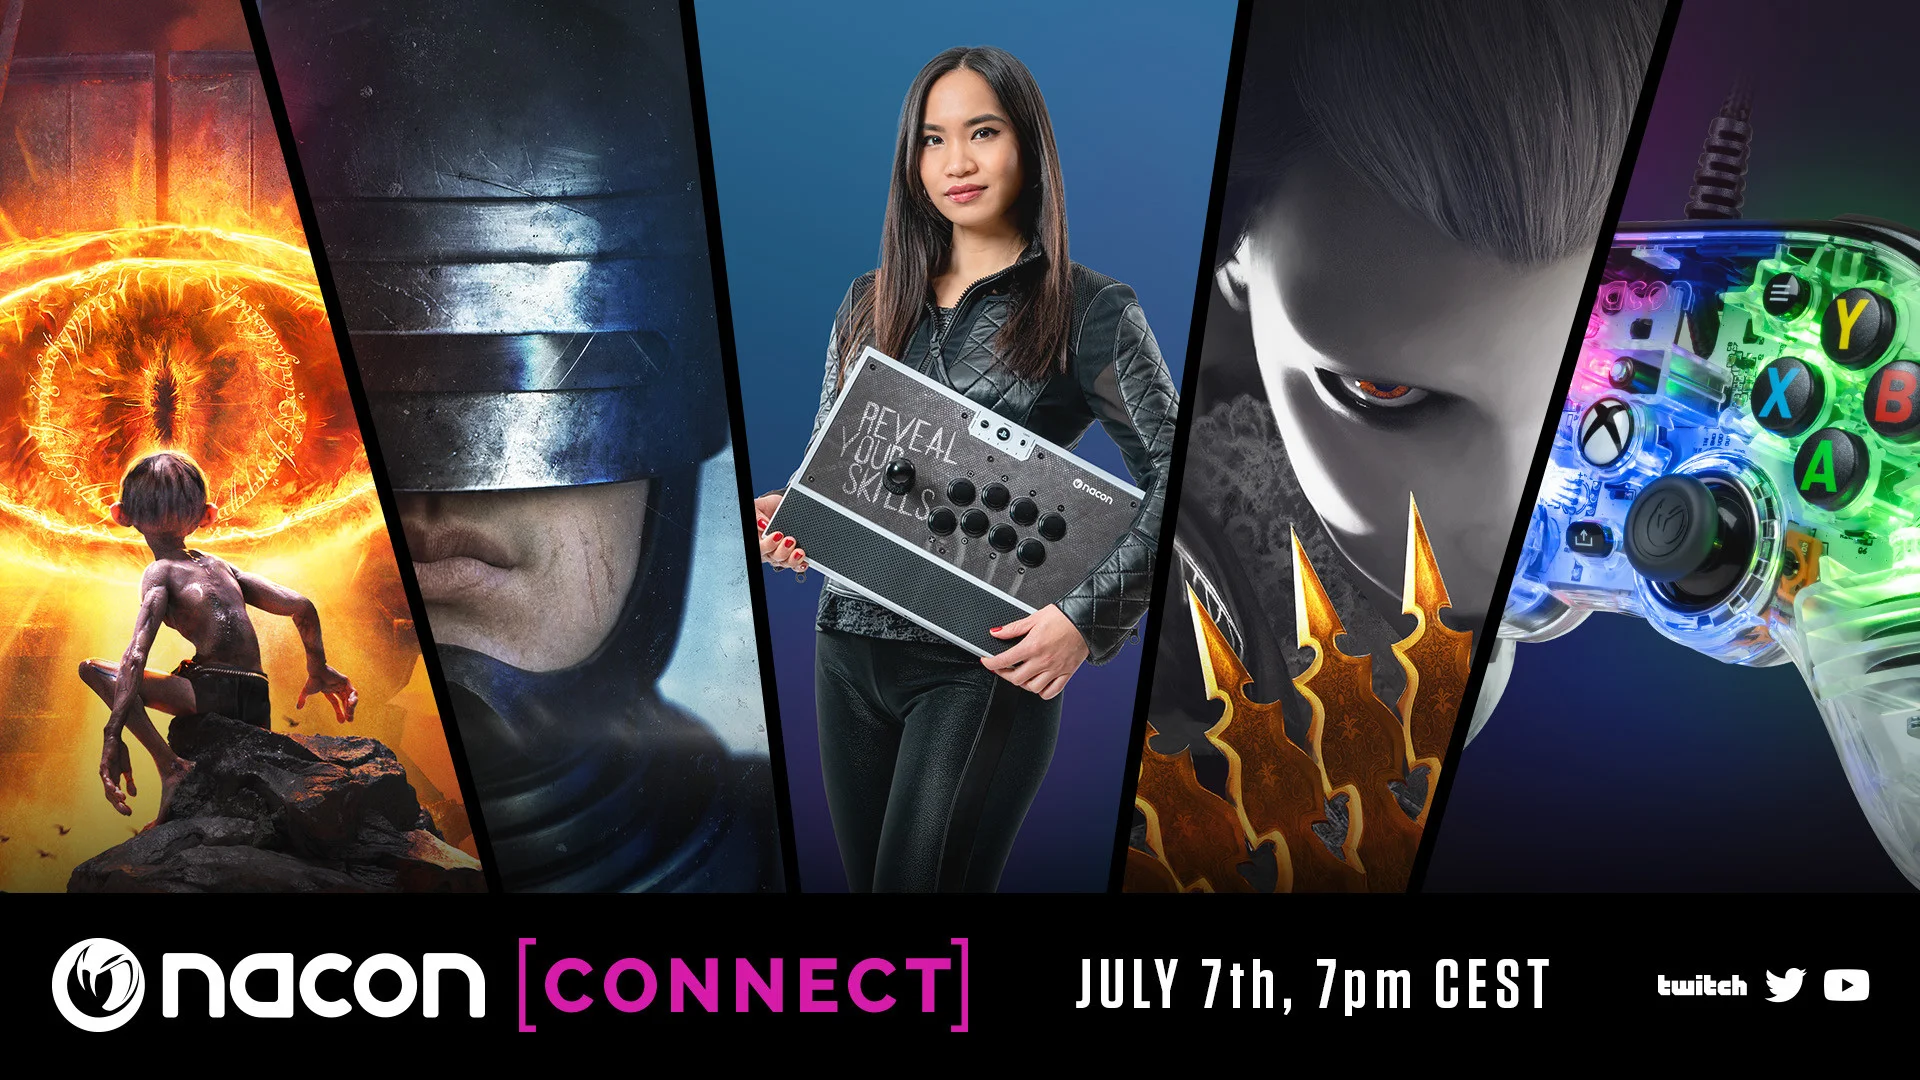 Nacon Connect пройдёт 7 июля — покажут Steelrising, Gollum и игру про Робокопа - фото 1